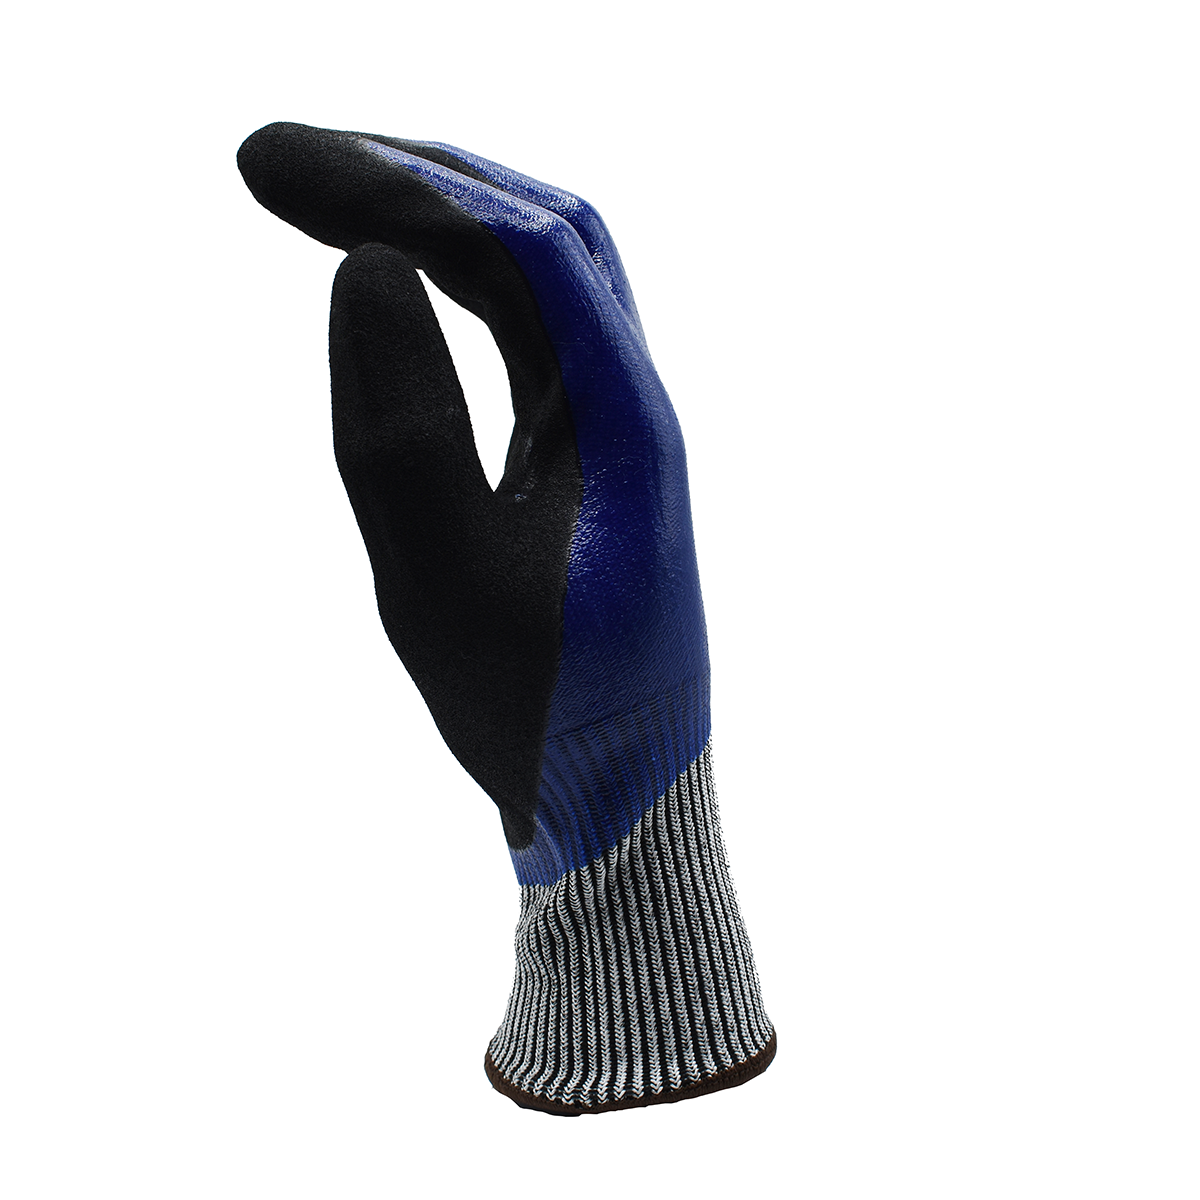 Tuf-Cor Cut-Resistant Gloves, ANSI Cut level A4, Bulk 10-Pack